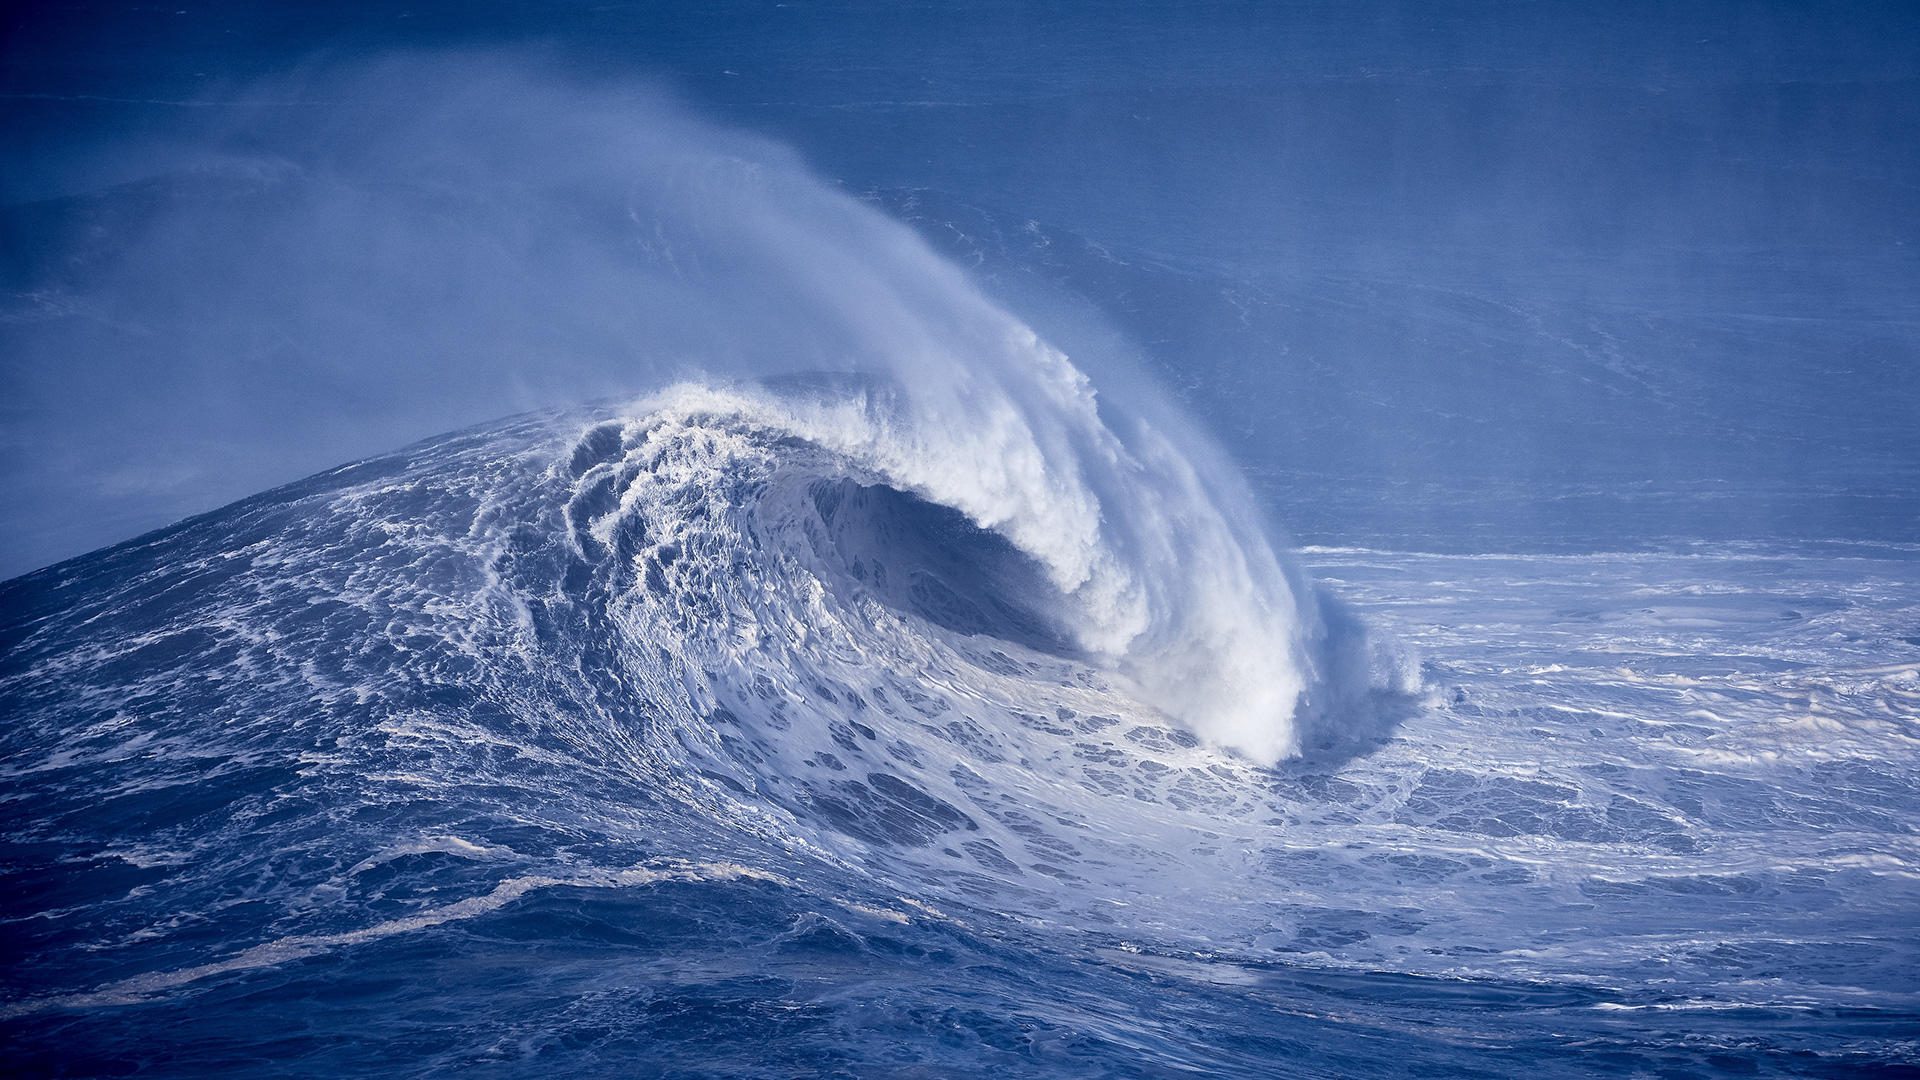 Jürg Kaufmann Captures the Beauty of the Monstrous Nazaré Waves